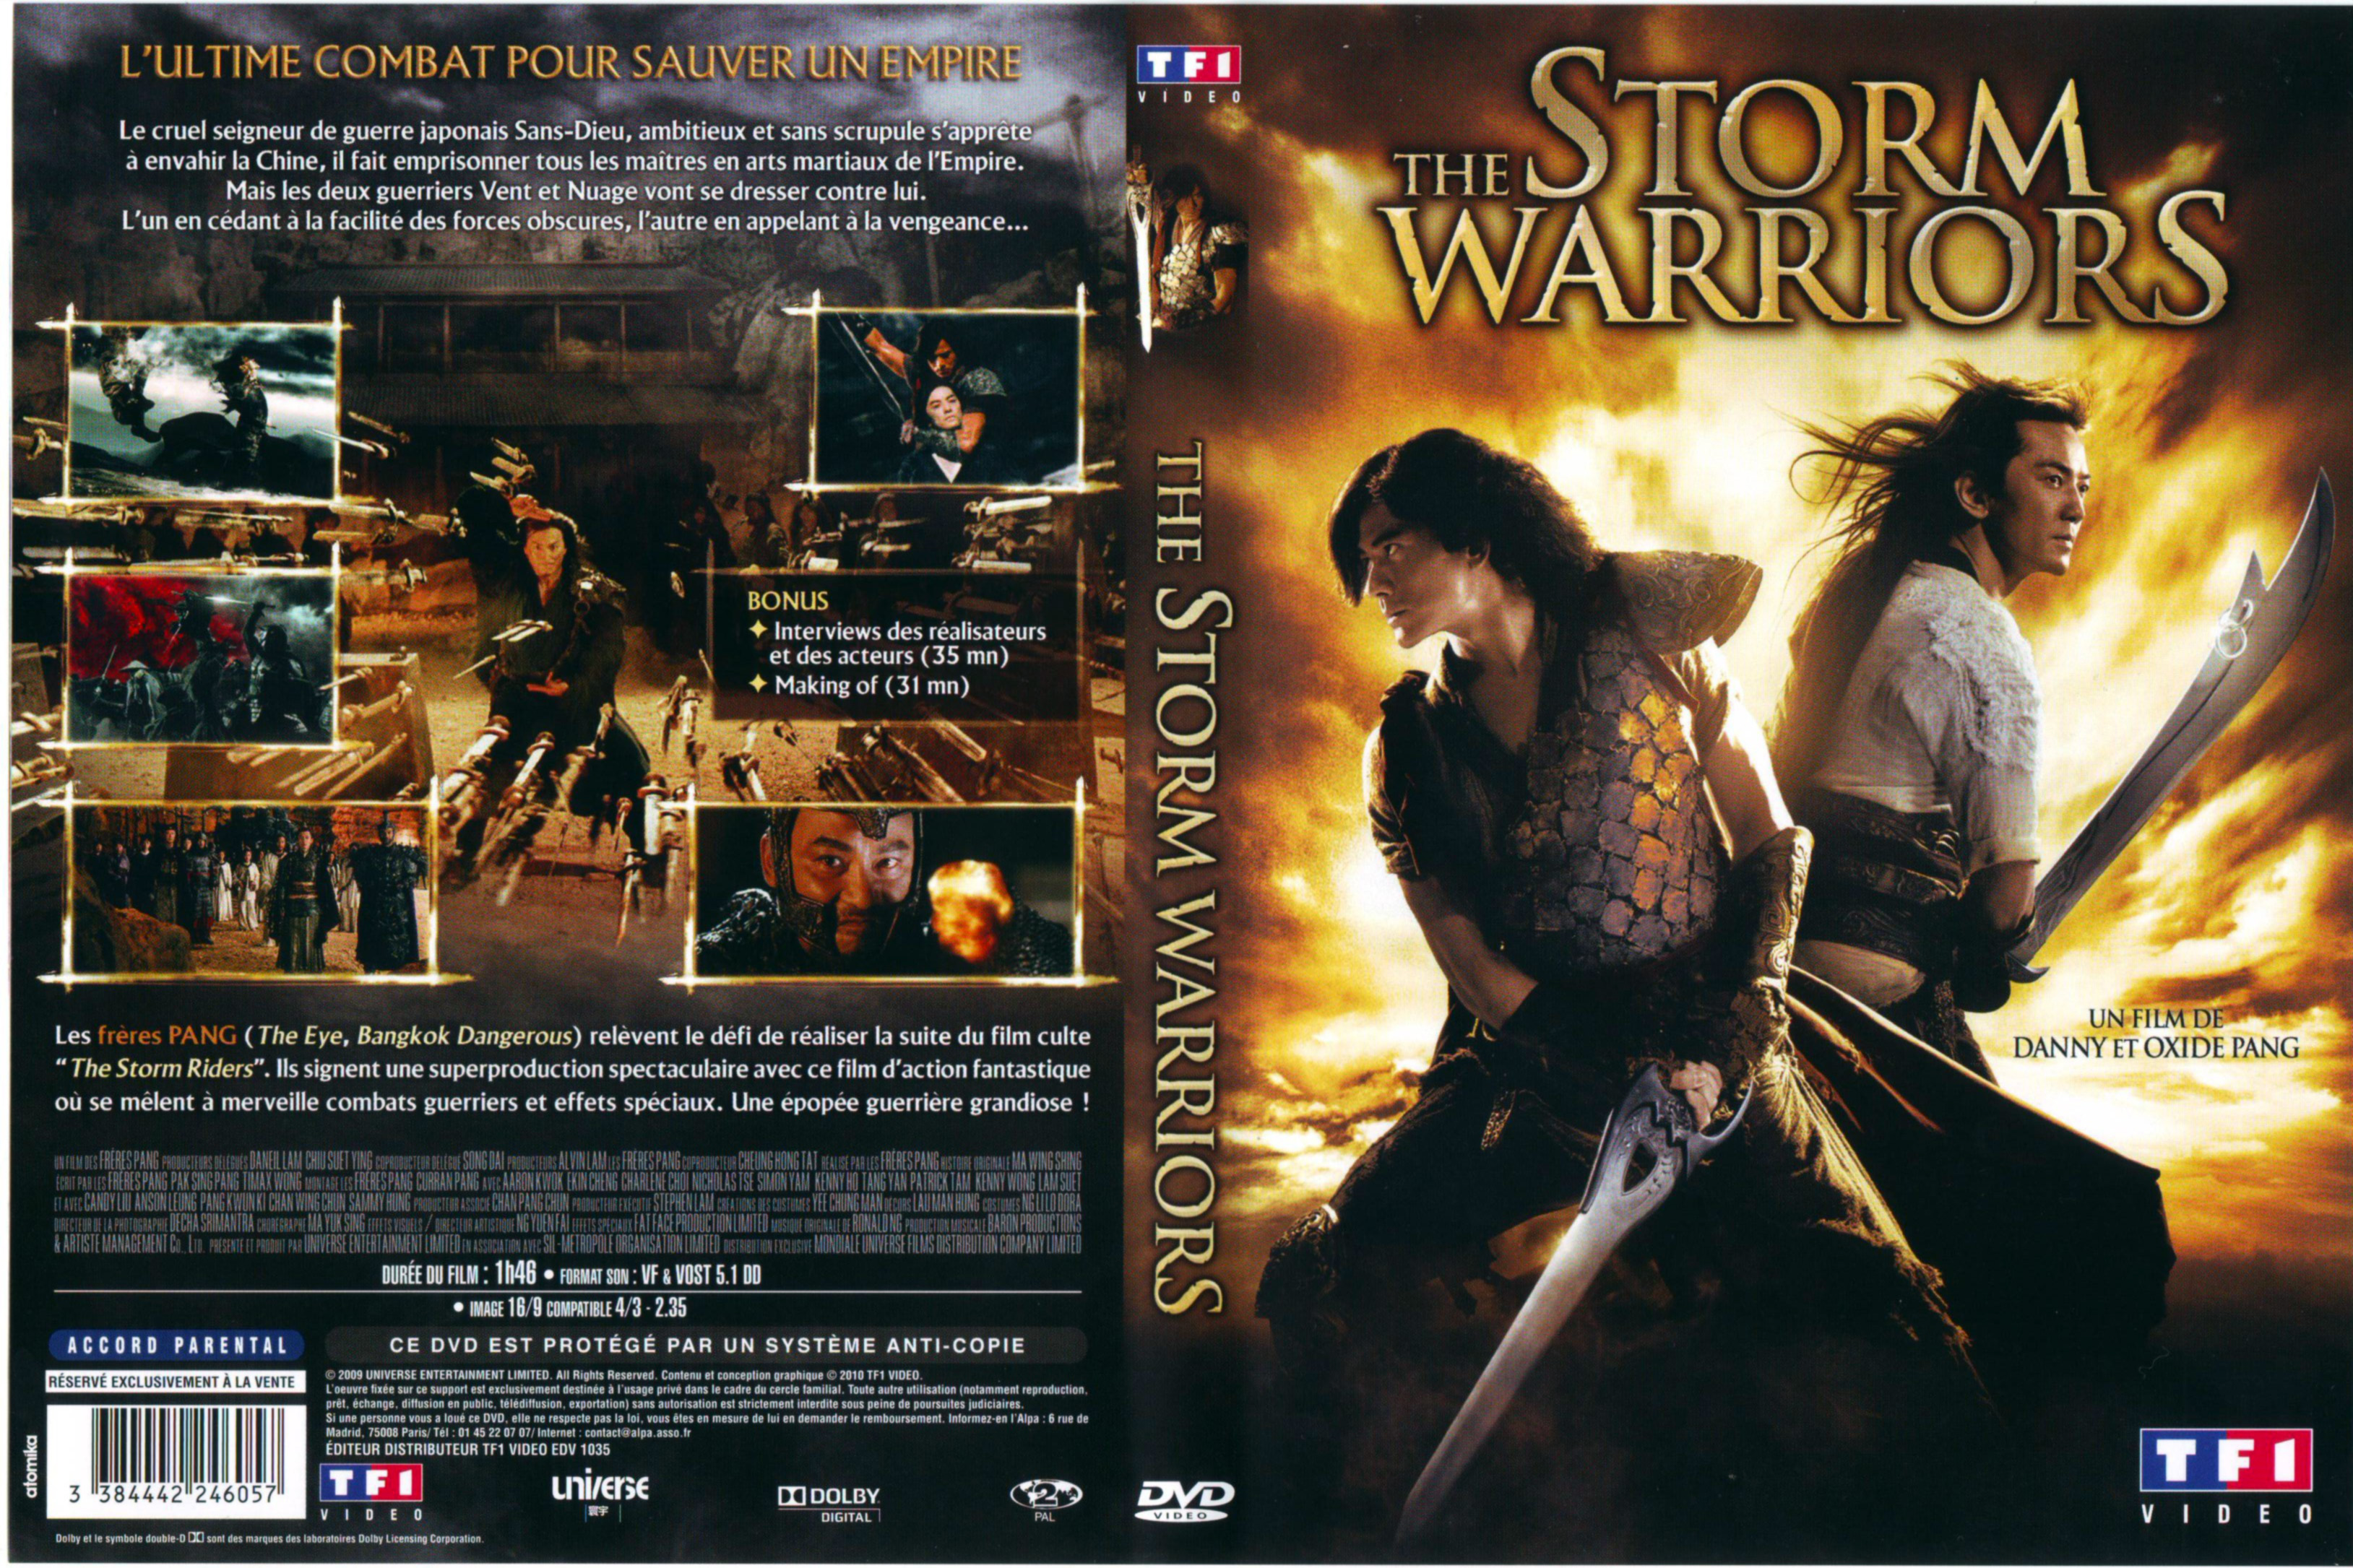 Jaquette DVD The storm warriors